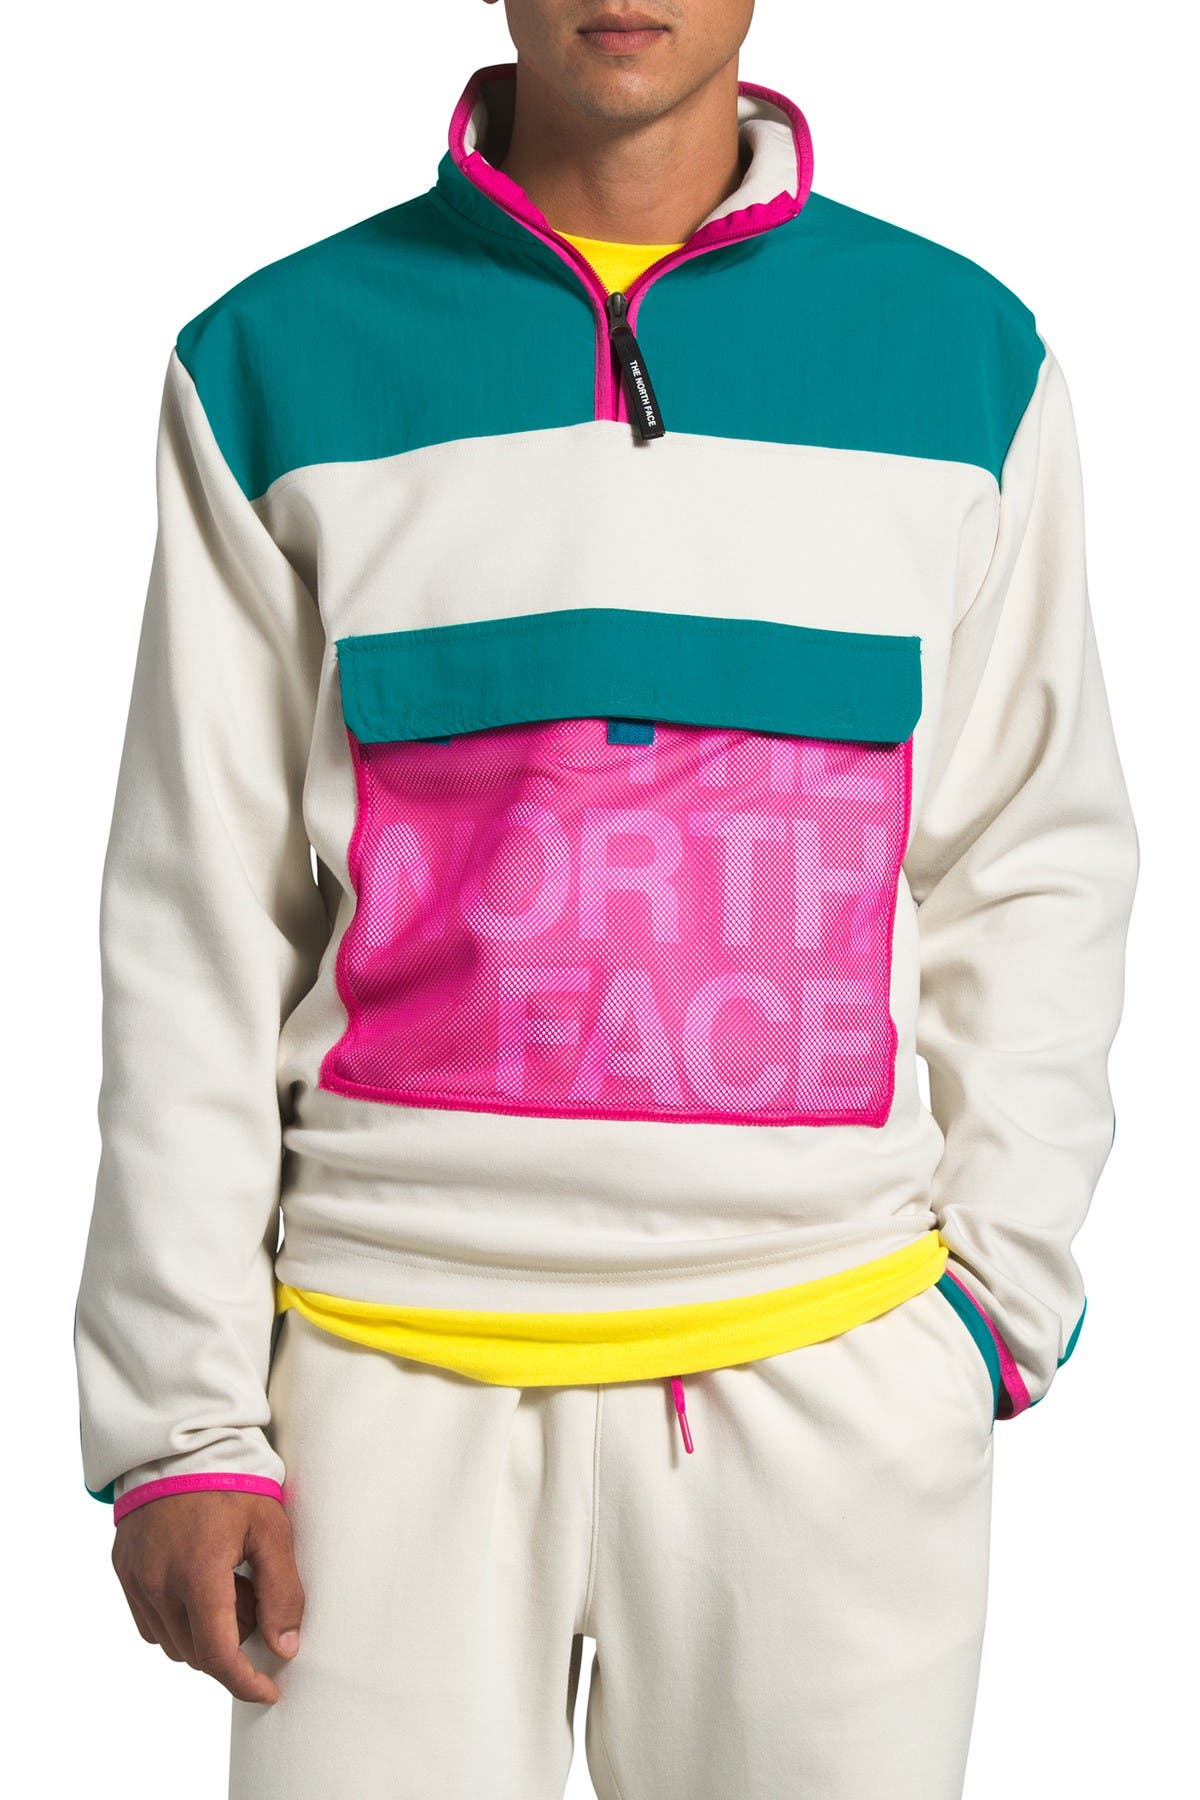 north face colorblock jacket